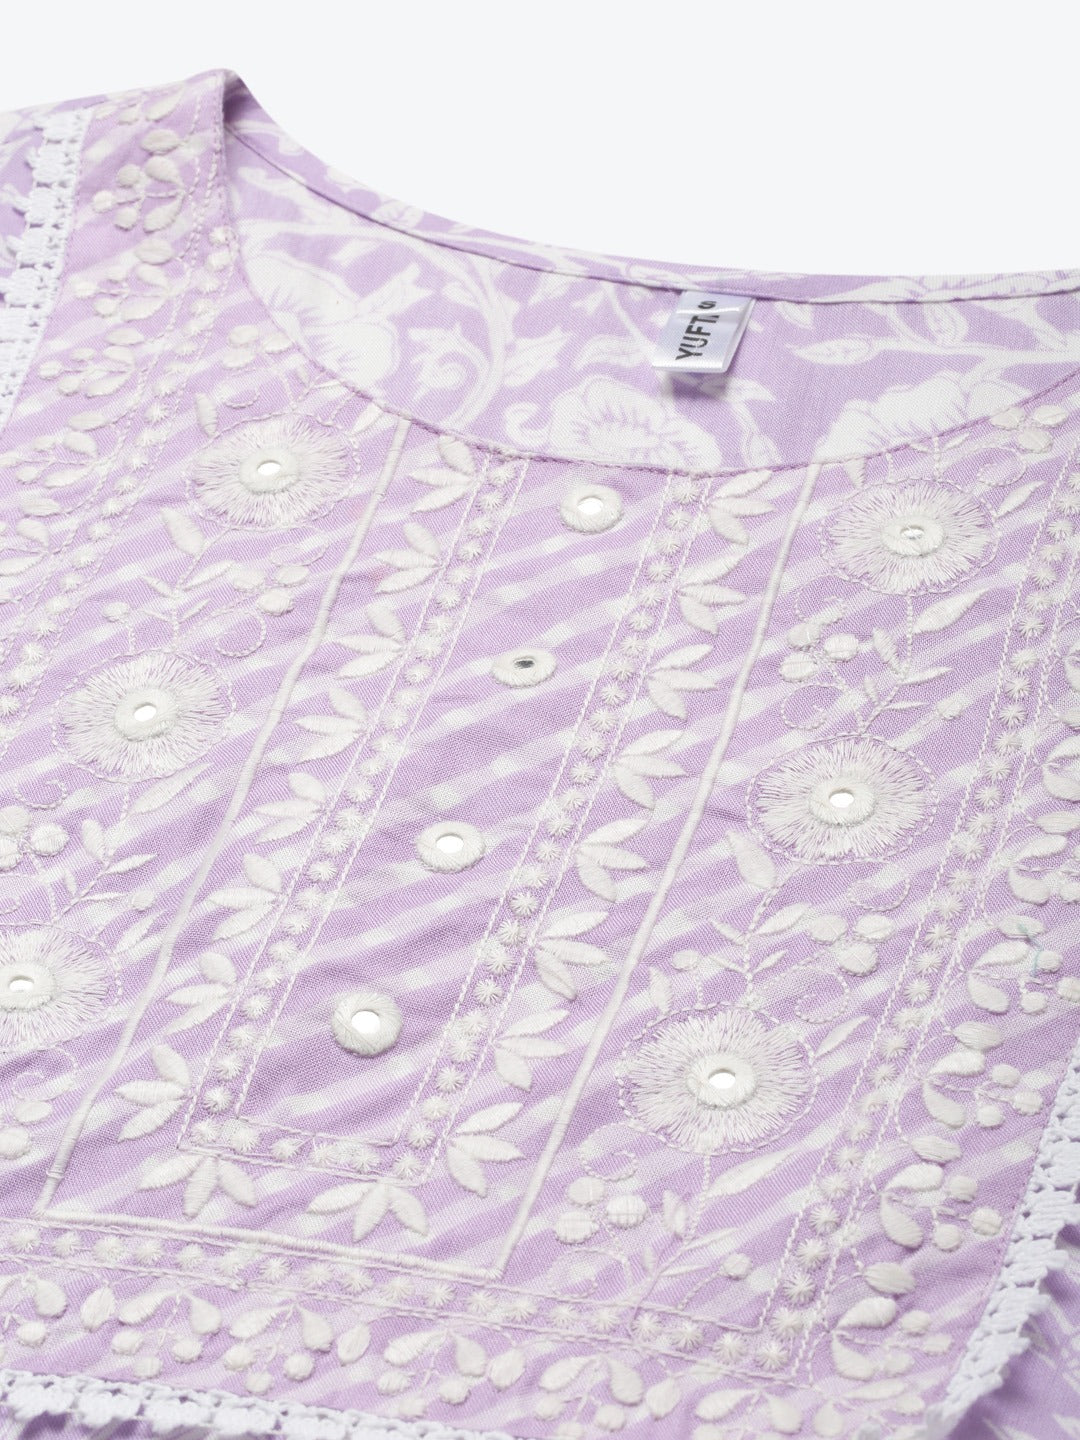 Lavender Embroidered Dress